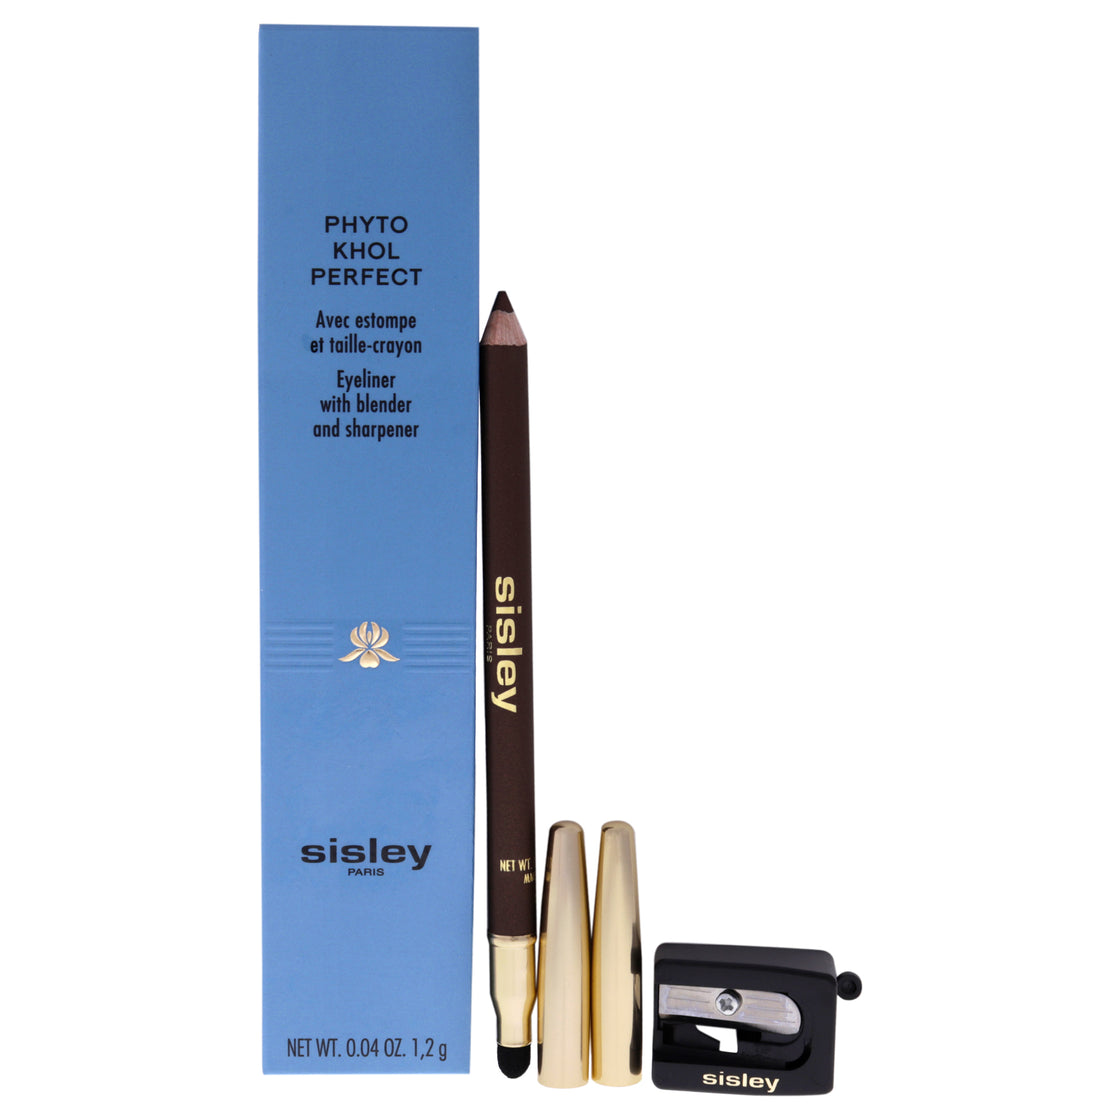 Phyto Khol Perfect Eyeliner With Blender and Sharpener - 2 Brown by Sisley for Women -0.04 oz Eyeliner